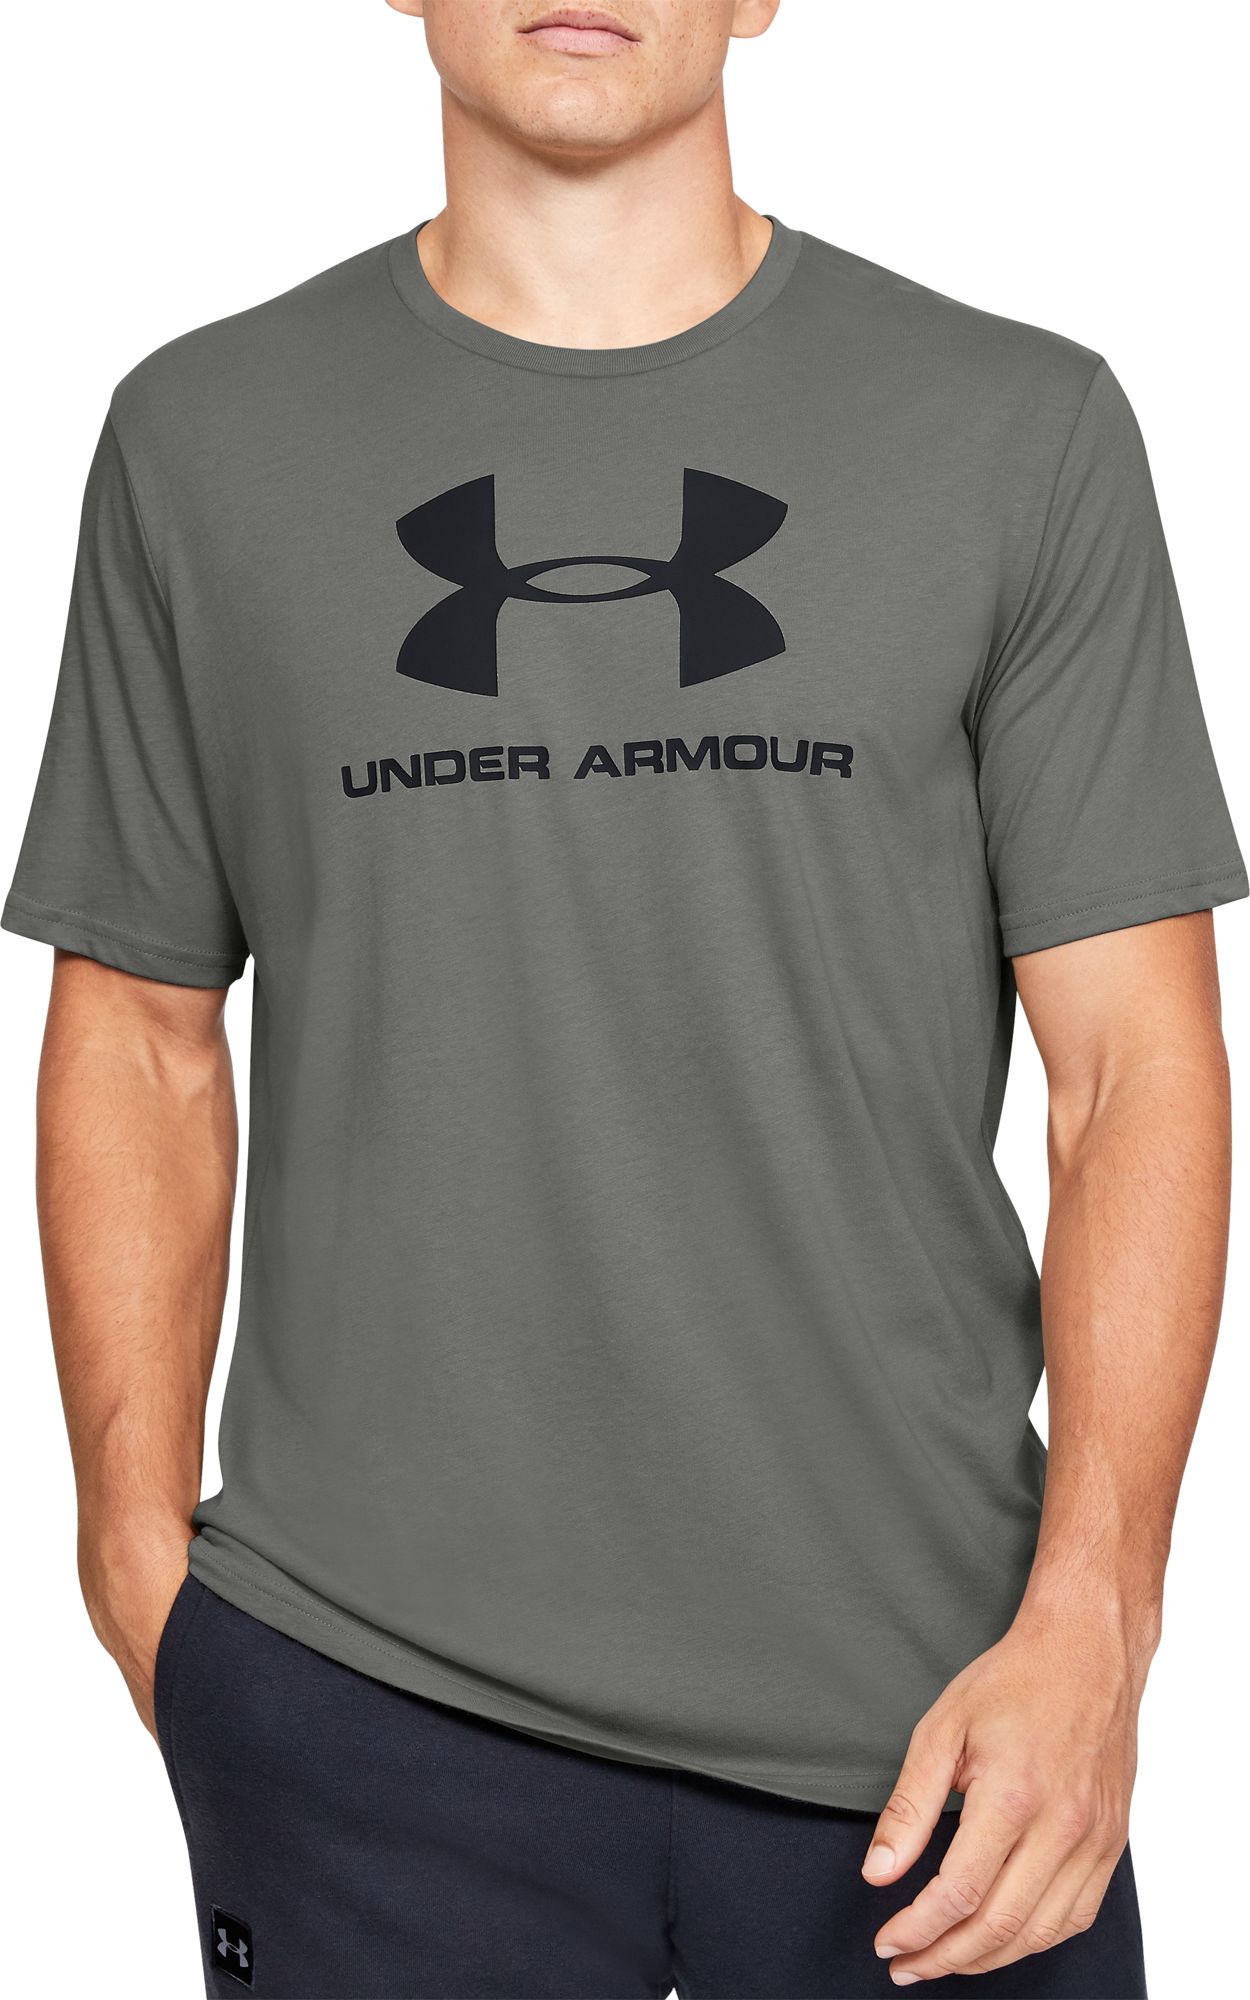 under armour big logo shirt